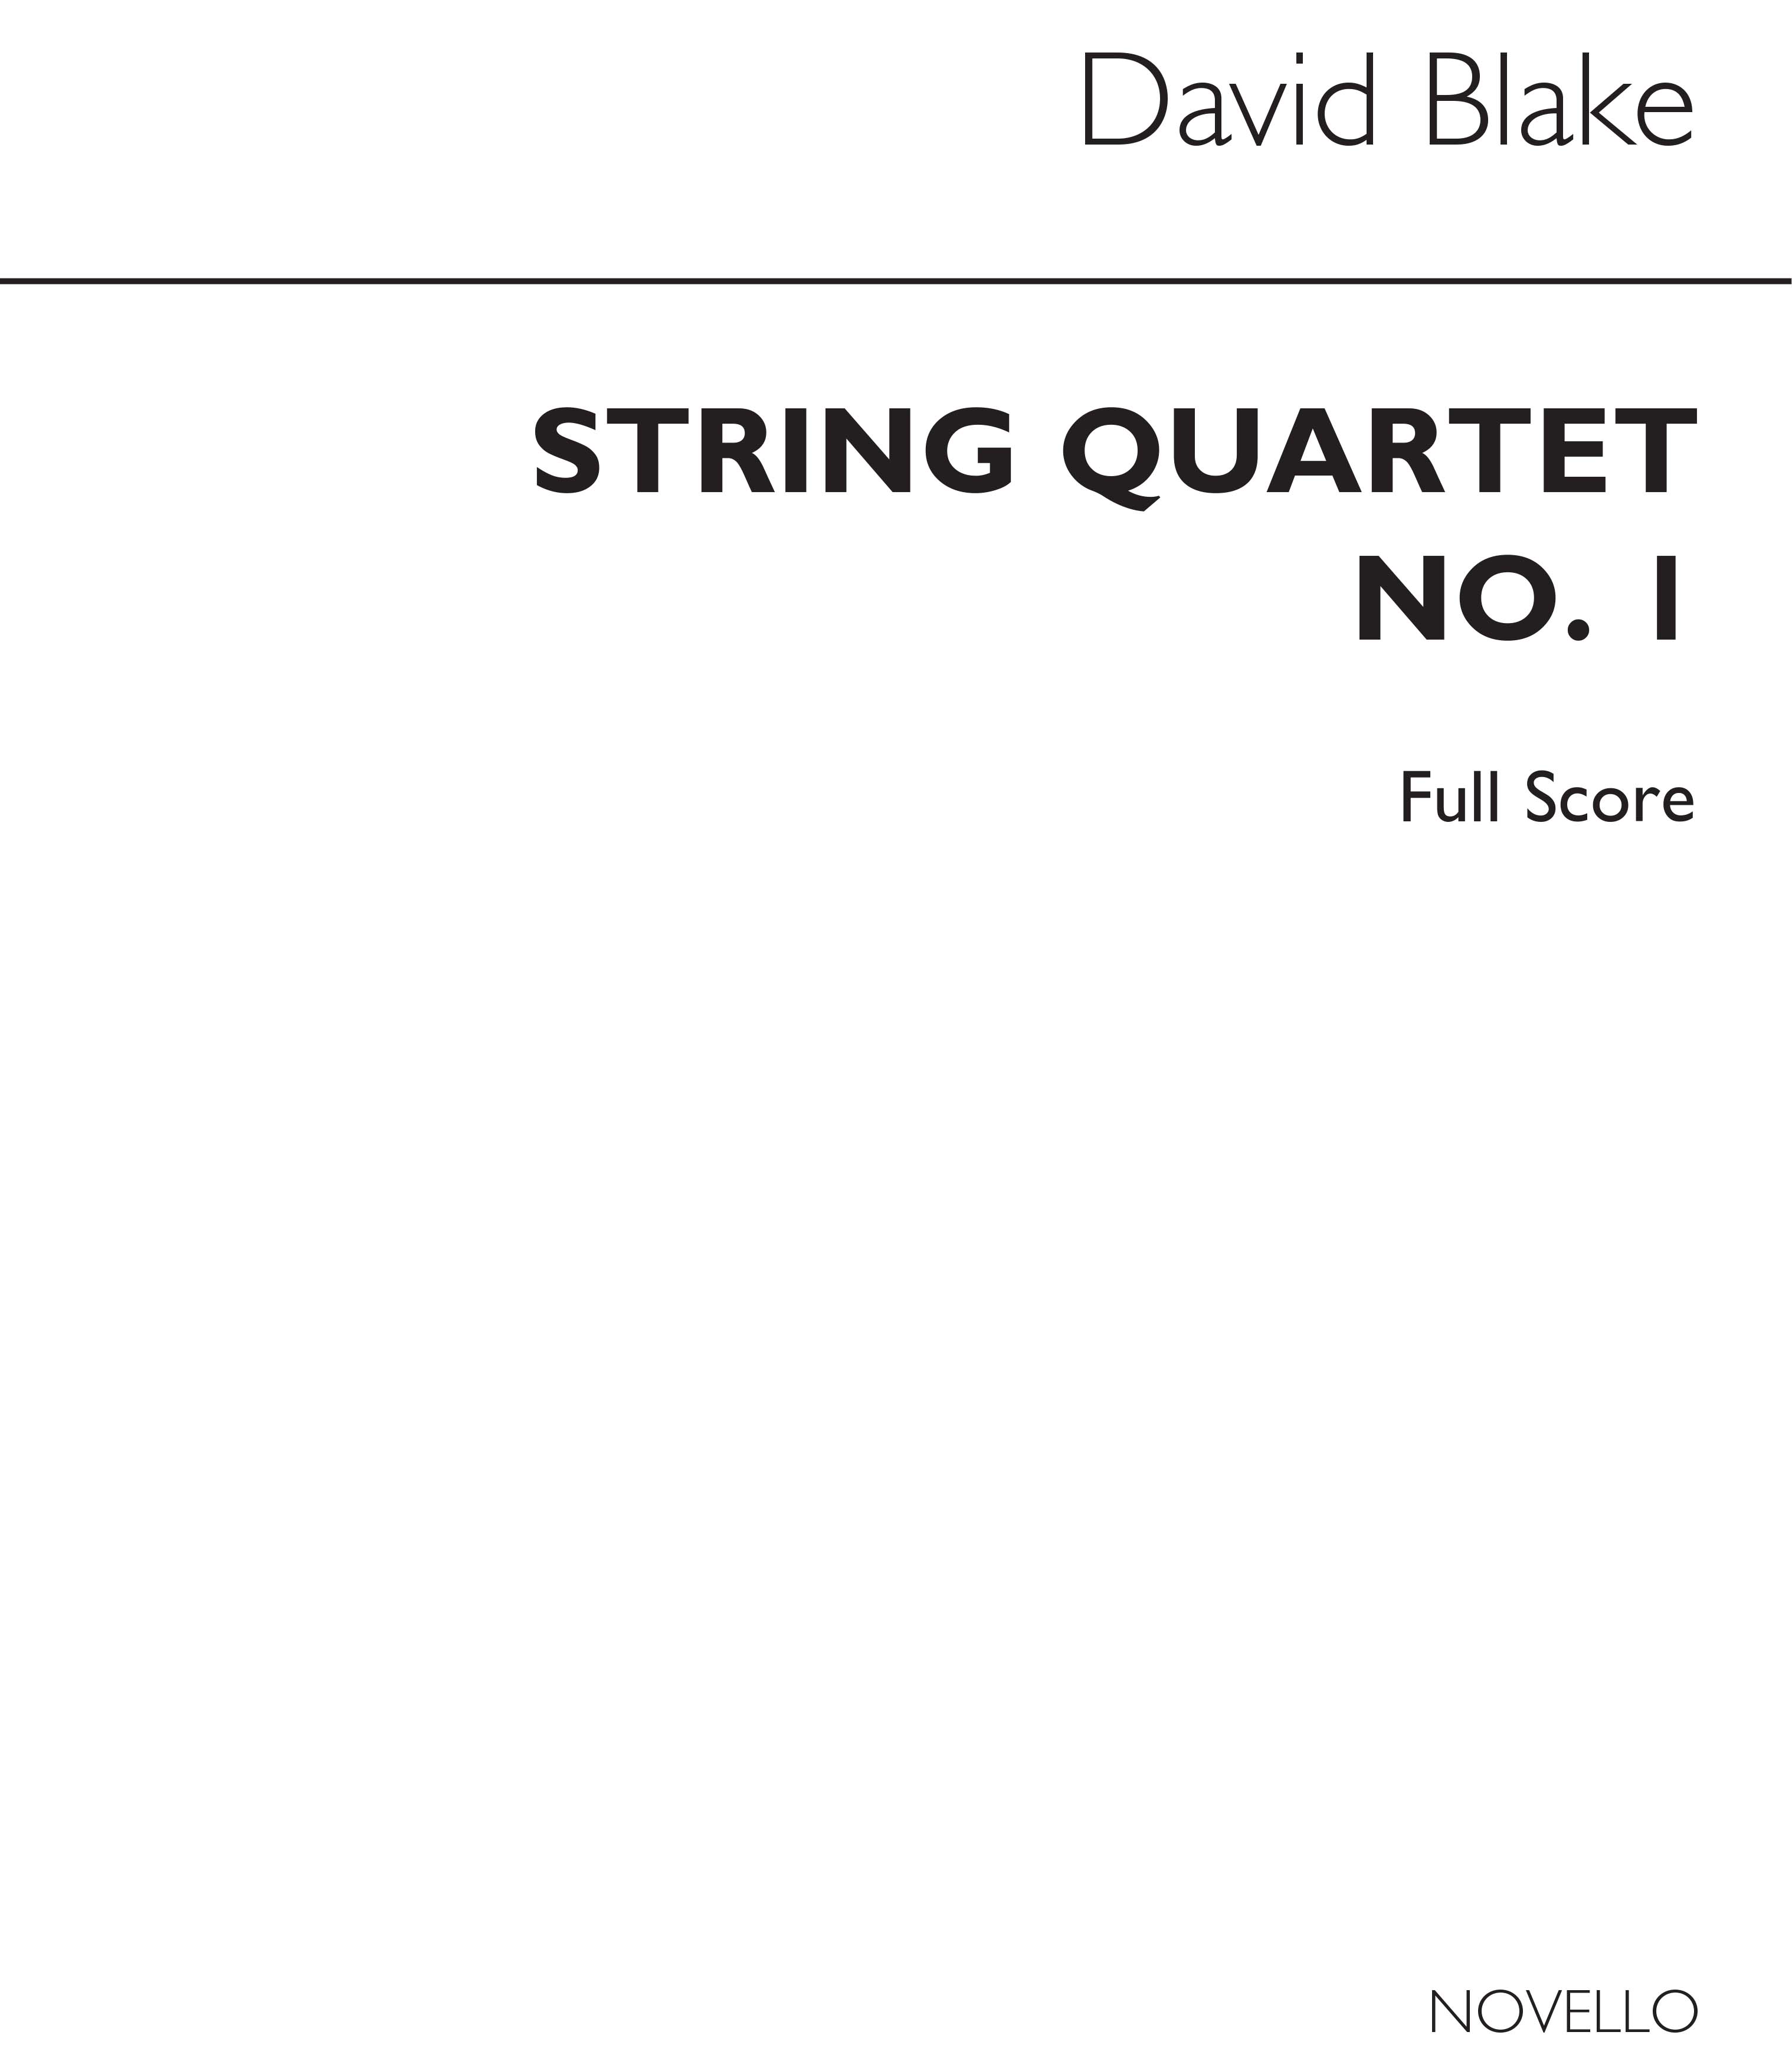 David Blake String Quartet No.1 Full Score